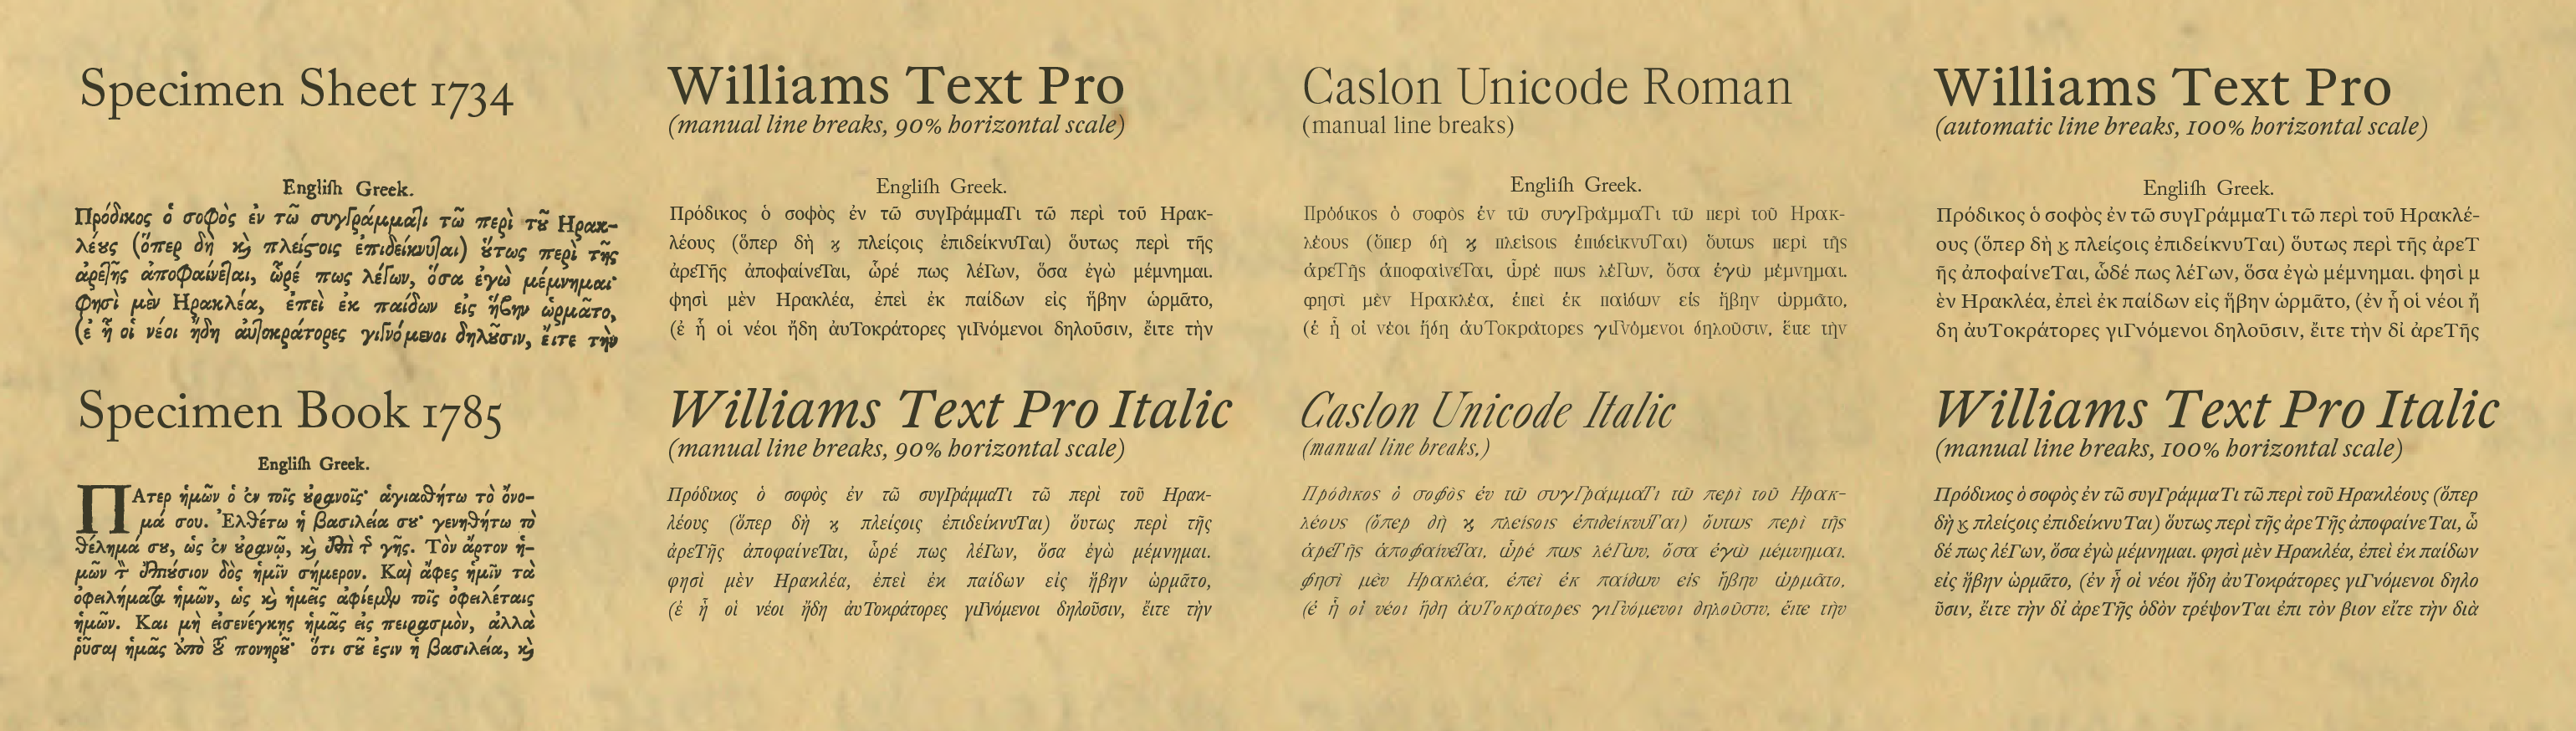 Original Caslon Greek vs William Text.